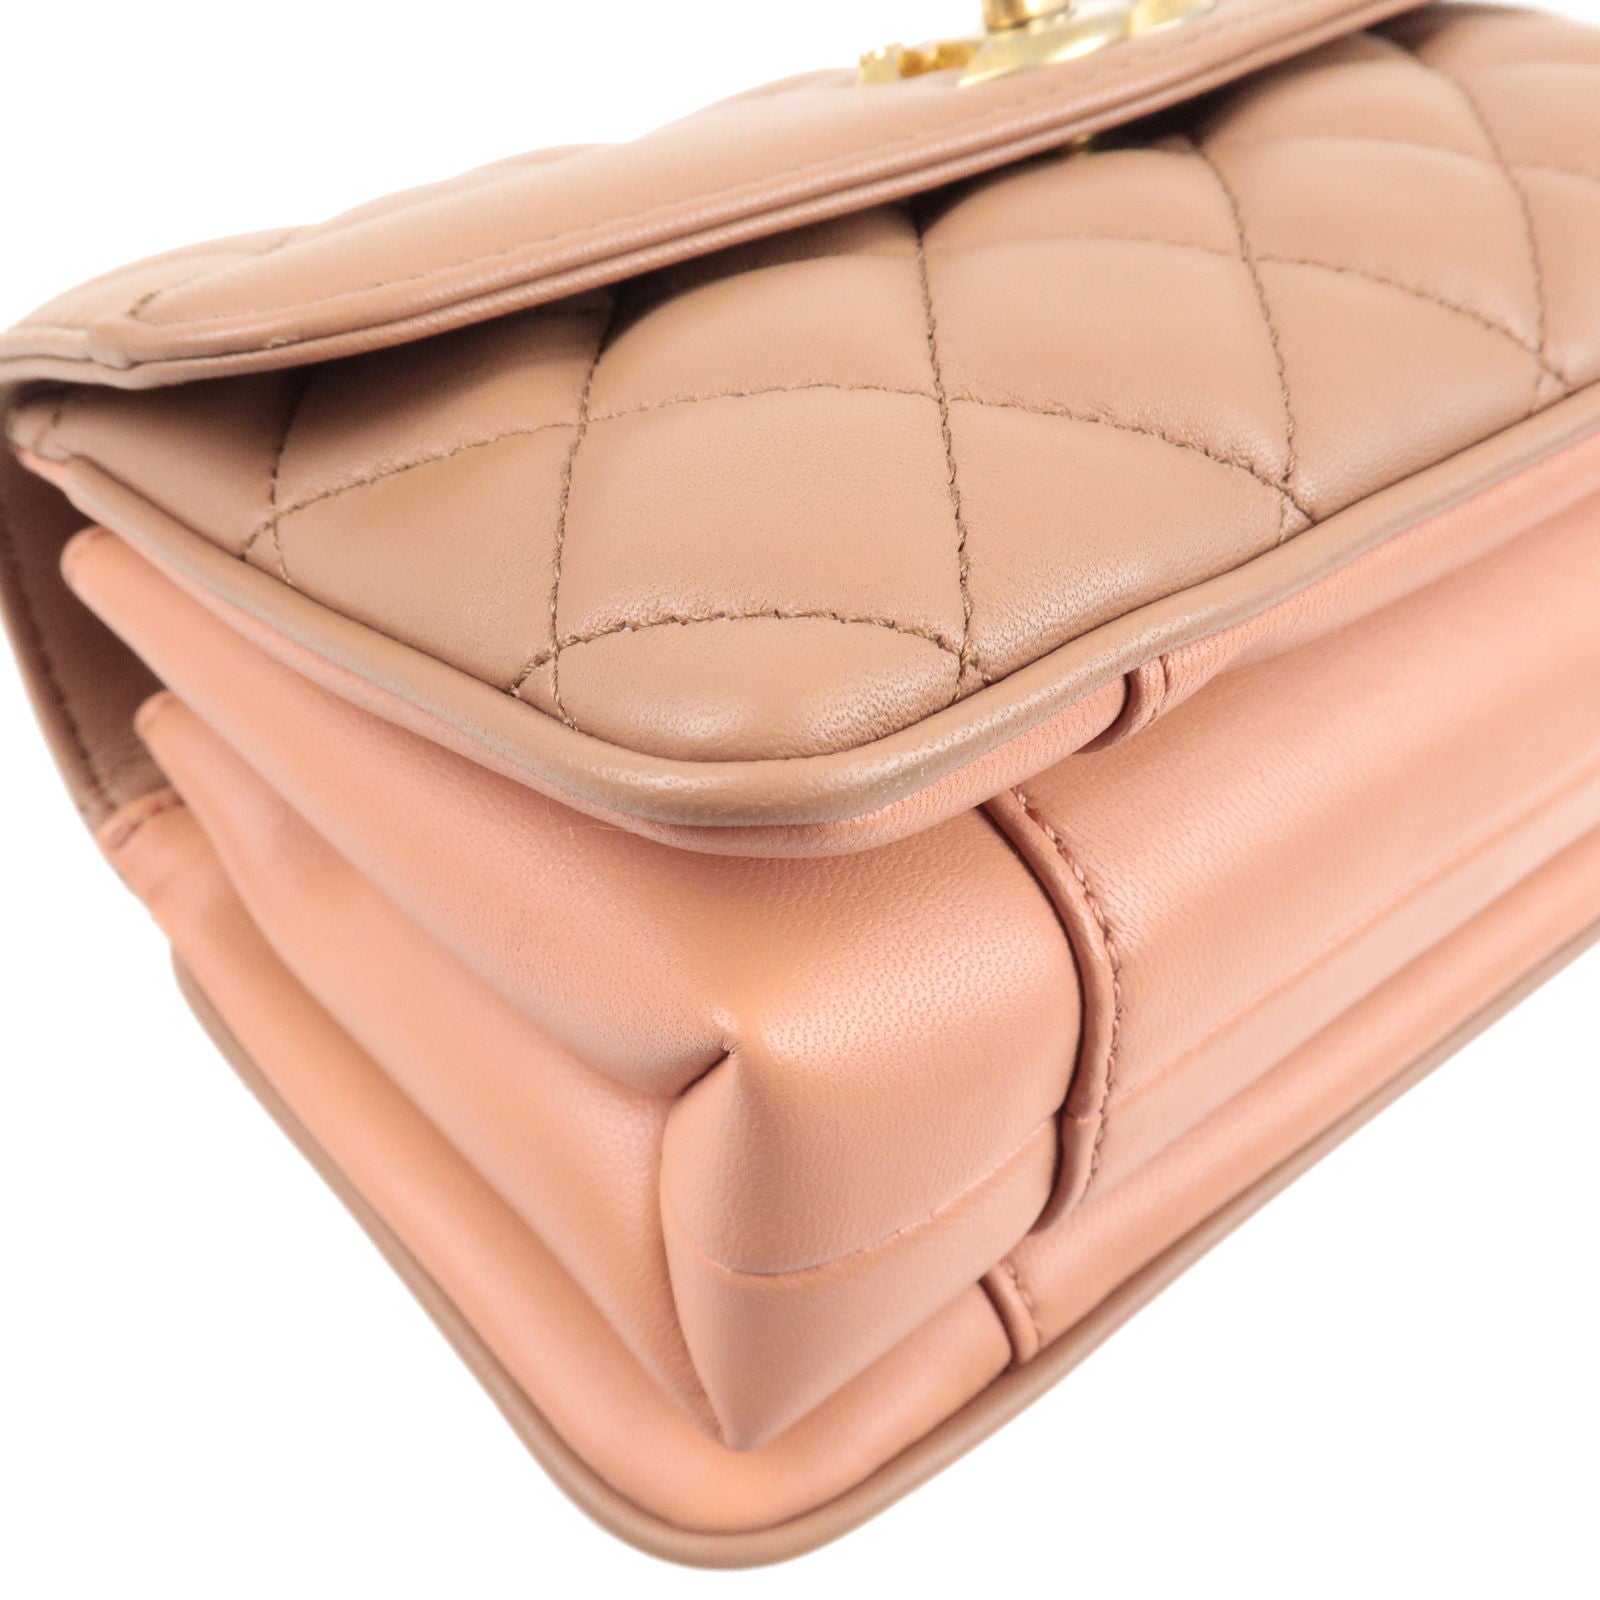 CHANEL Coco TurnLock Mini Matelasse Lambskin Chain Shoulder Bag – Tibi Trunk